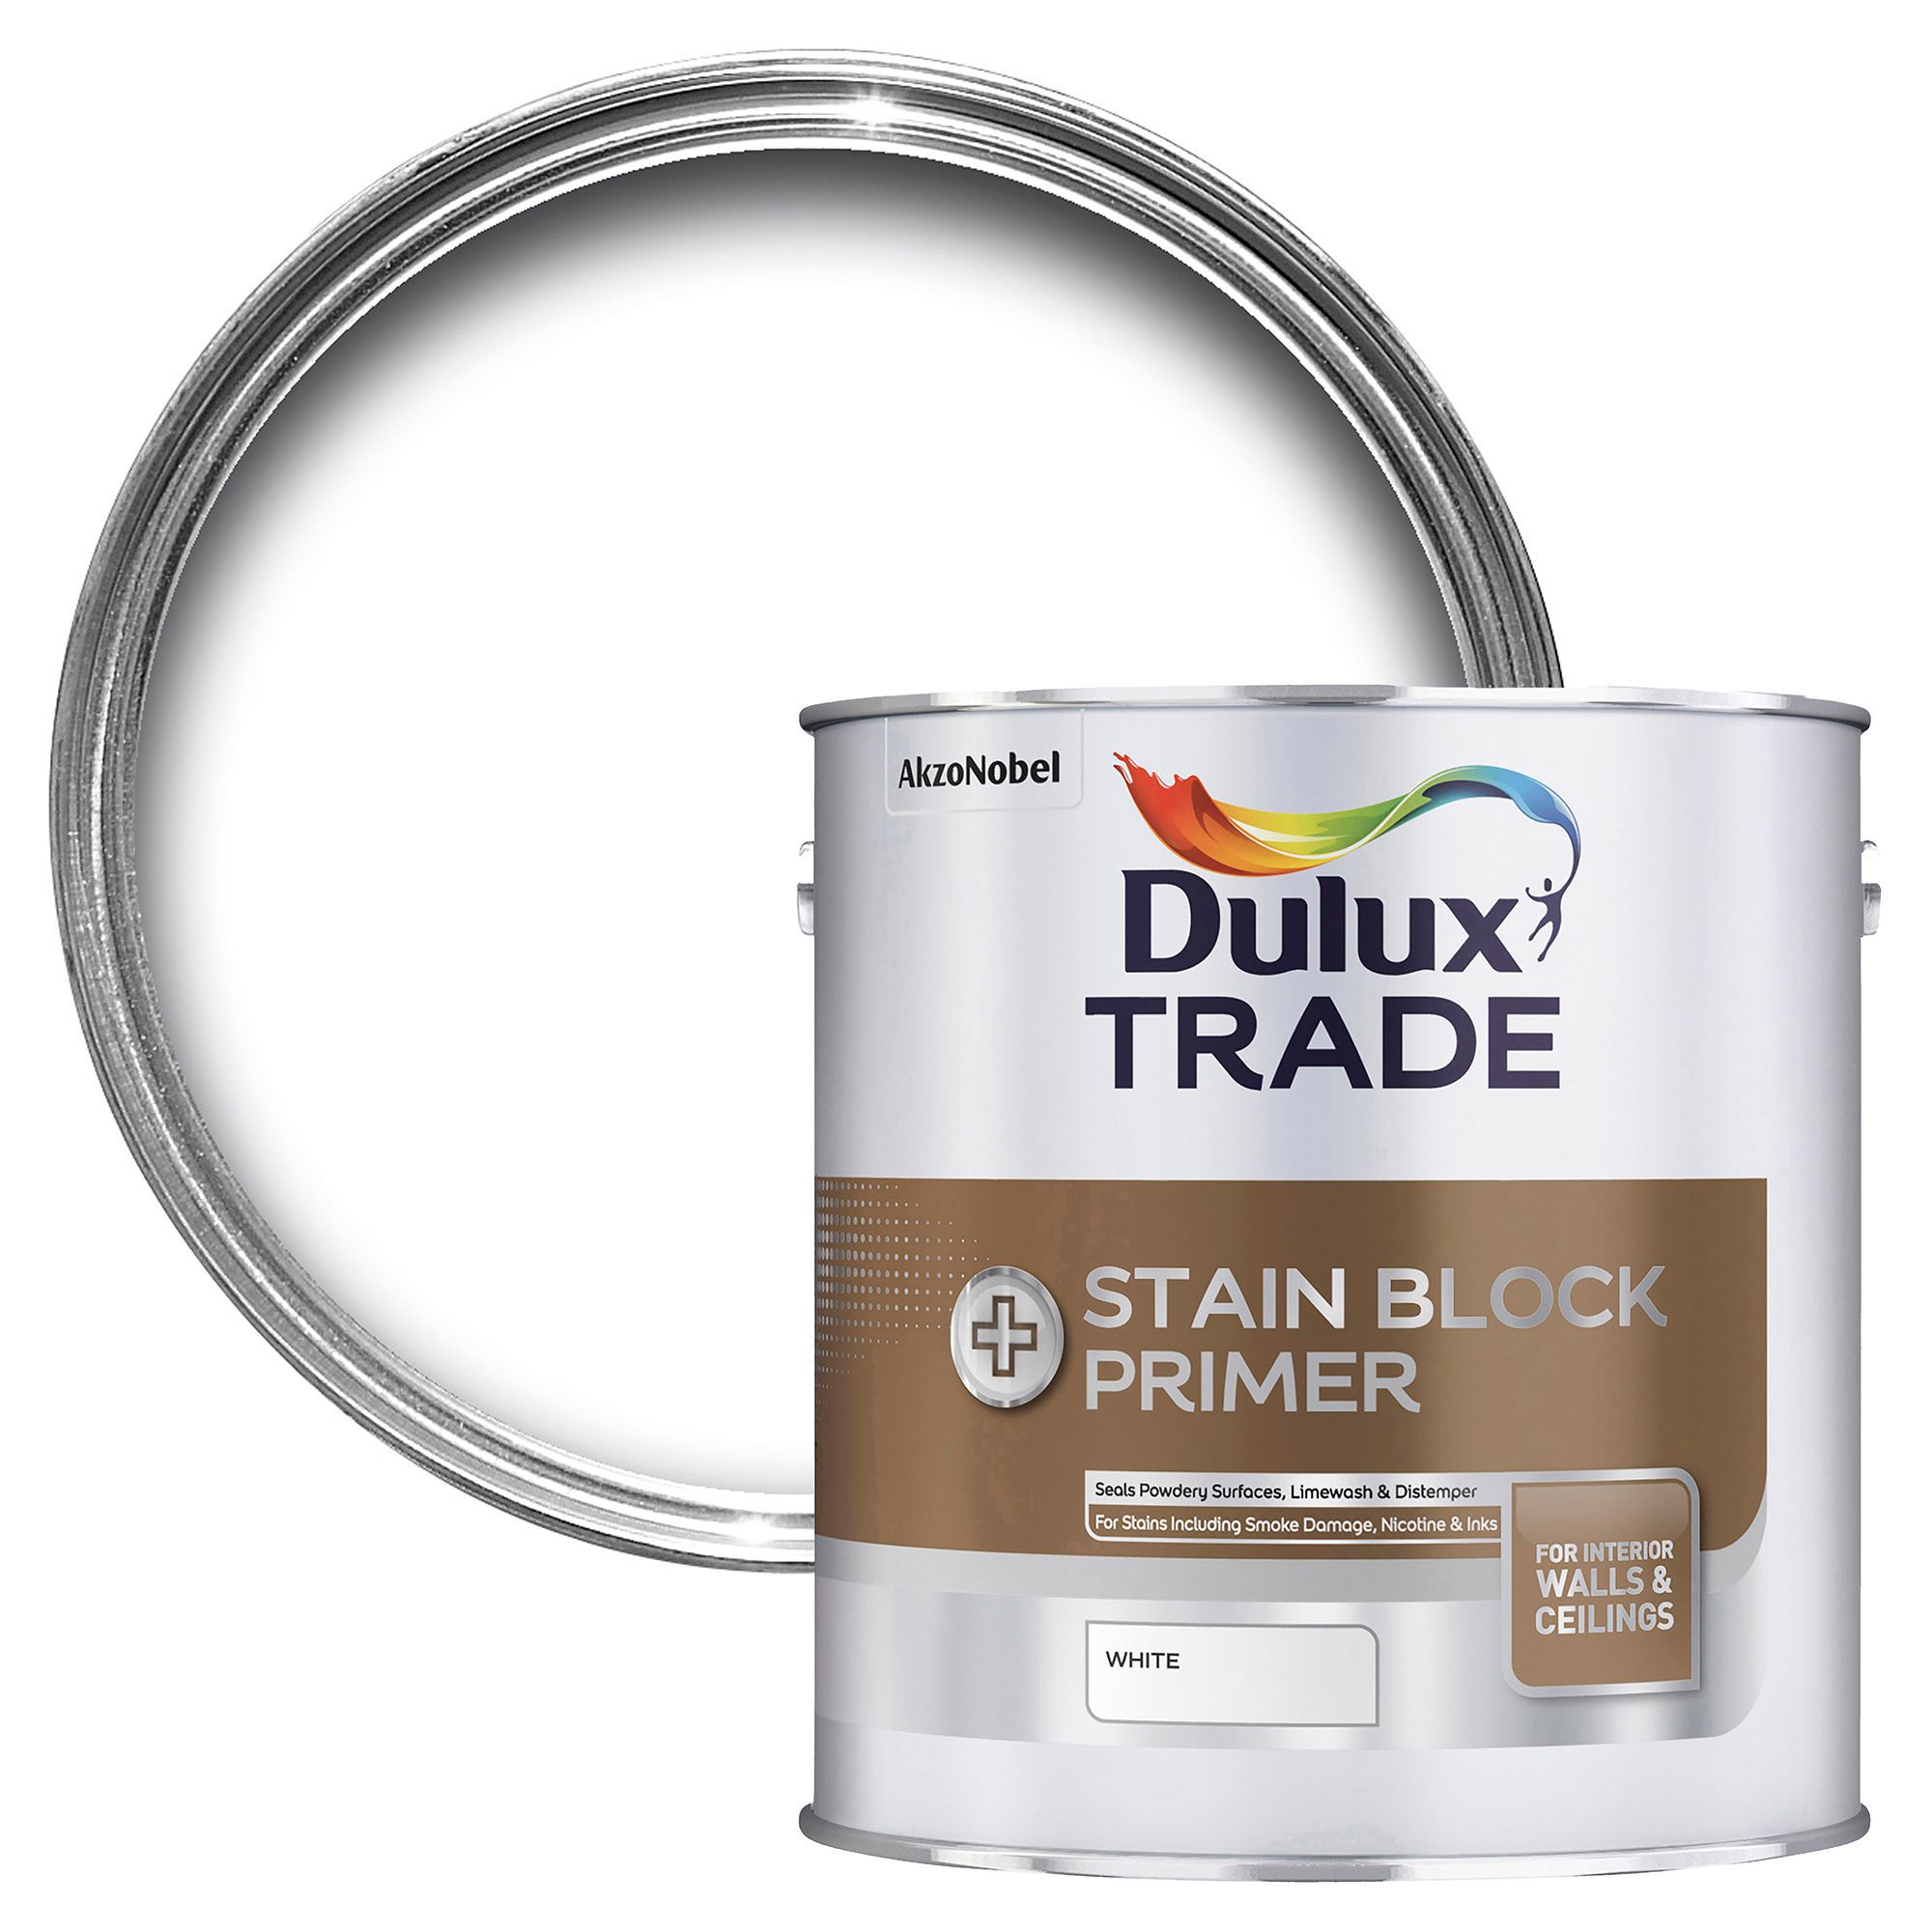 Dulux stain block